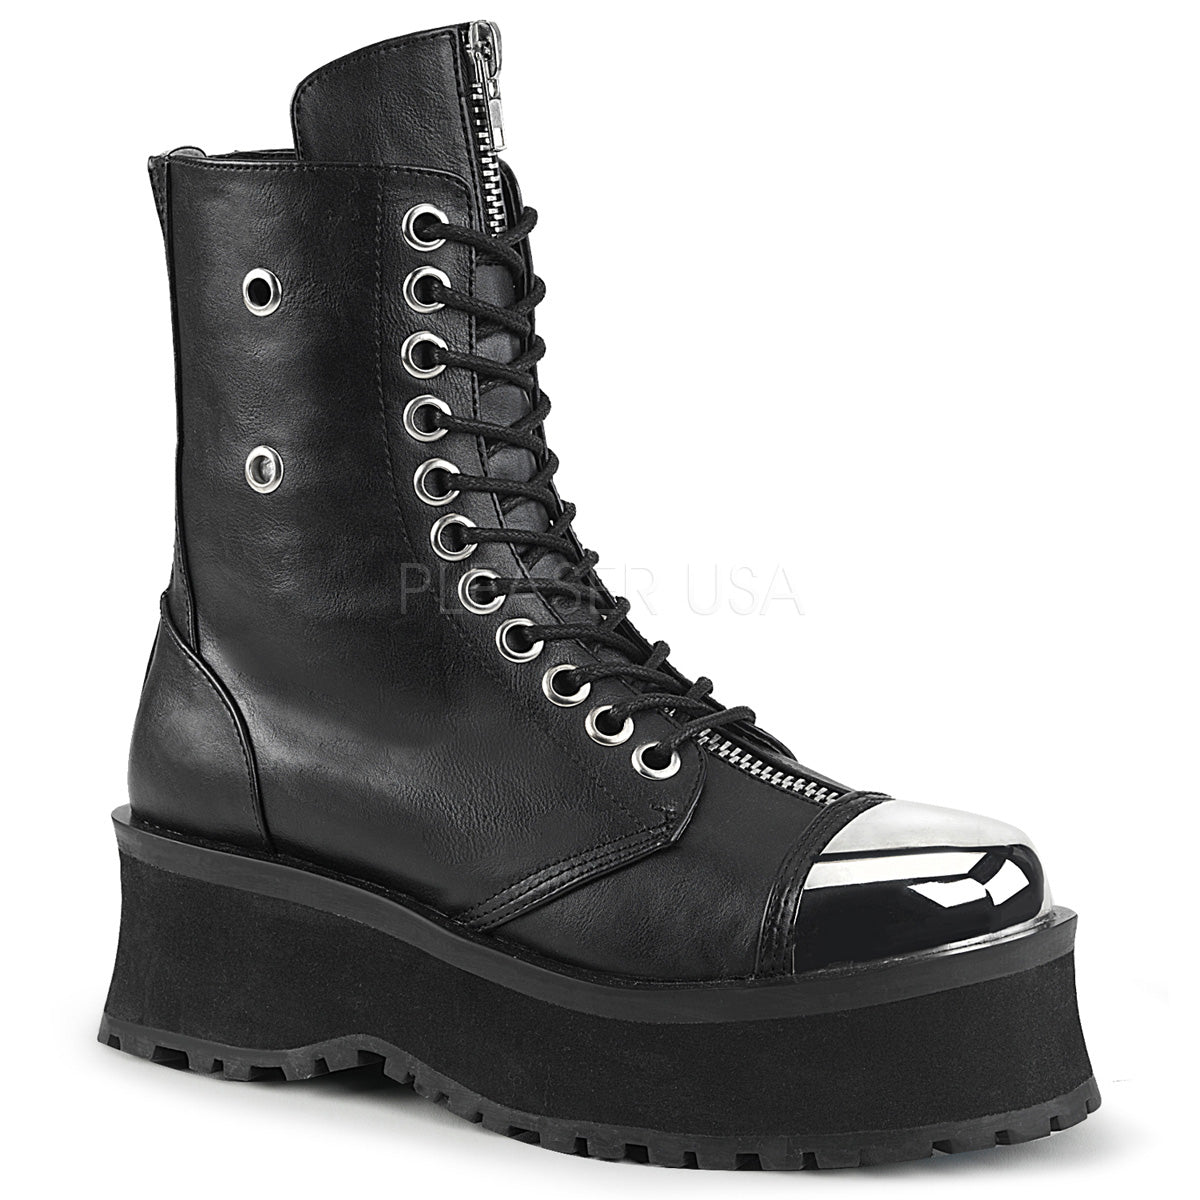 Demonia GRAVEDIGGER-10 Black 2 3/4" Platform Lace-Up Ankle Boot With Silver Chrome Plated Metal Toe Cap & Zipper Details, Metal Back Zip Closure